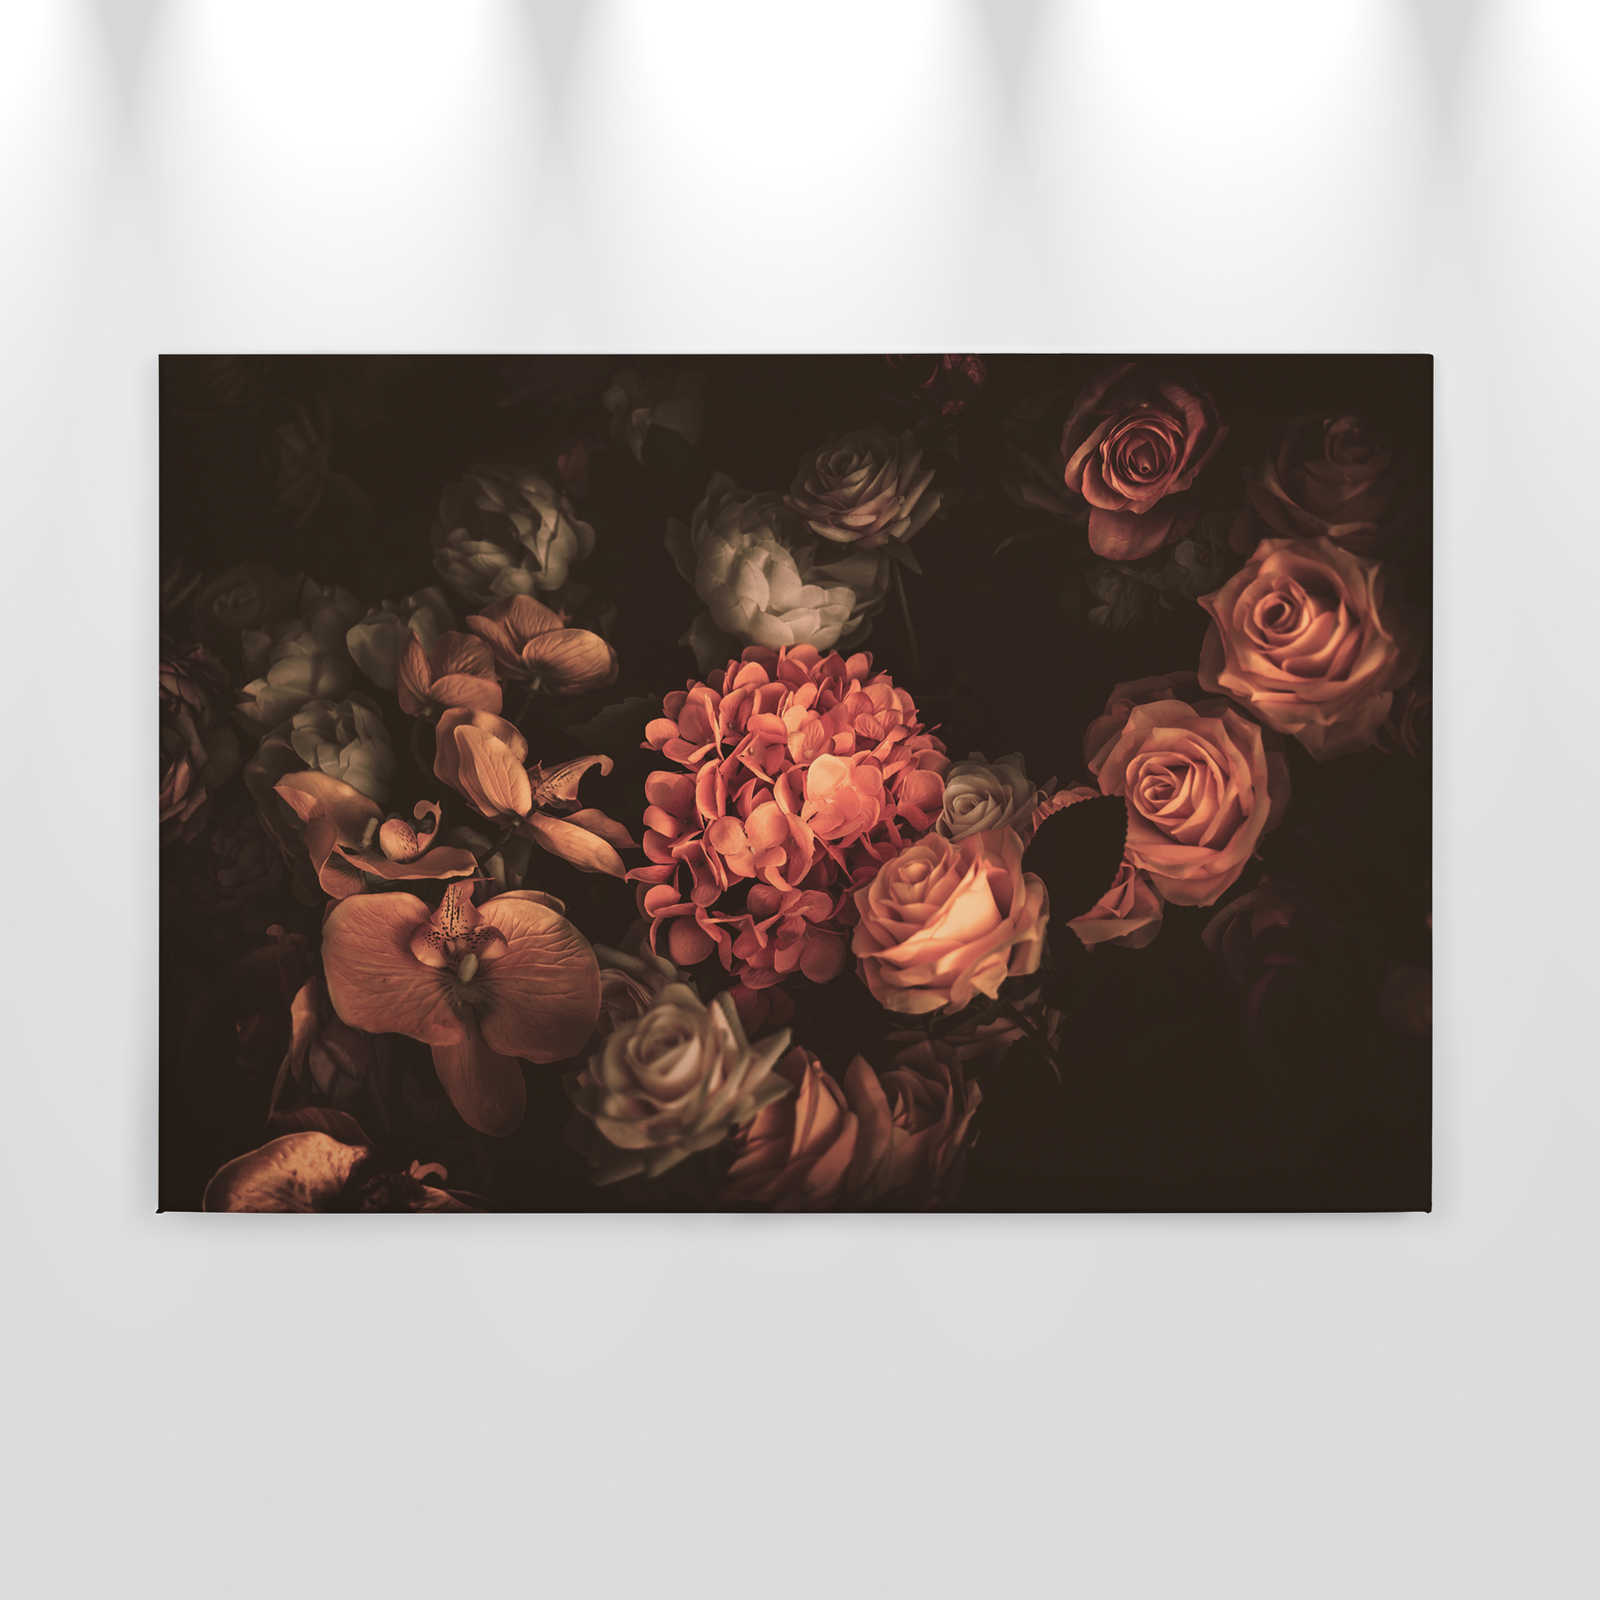             Romantic Canvas with Bouquet of Flowers - 0.90 m x 0.60 m
        